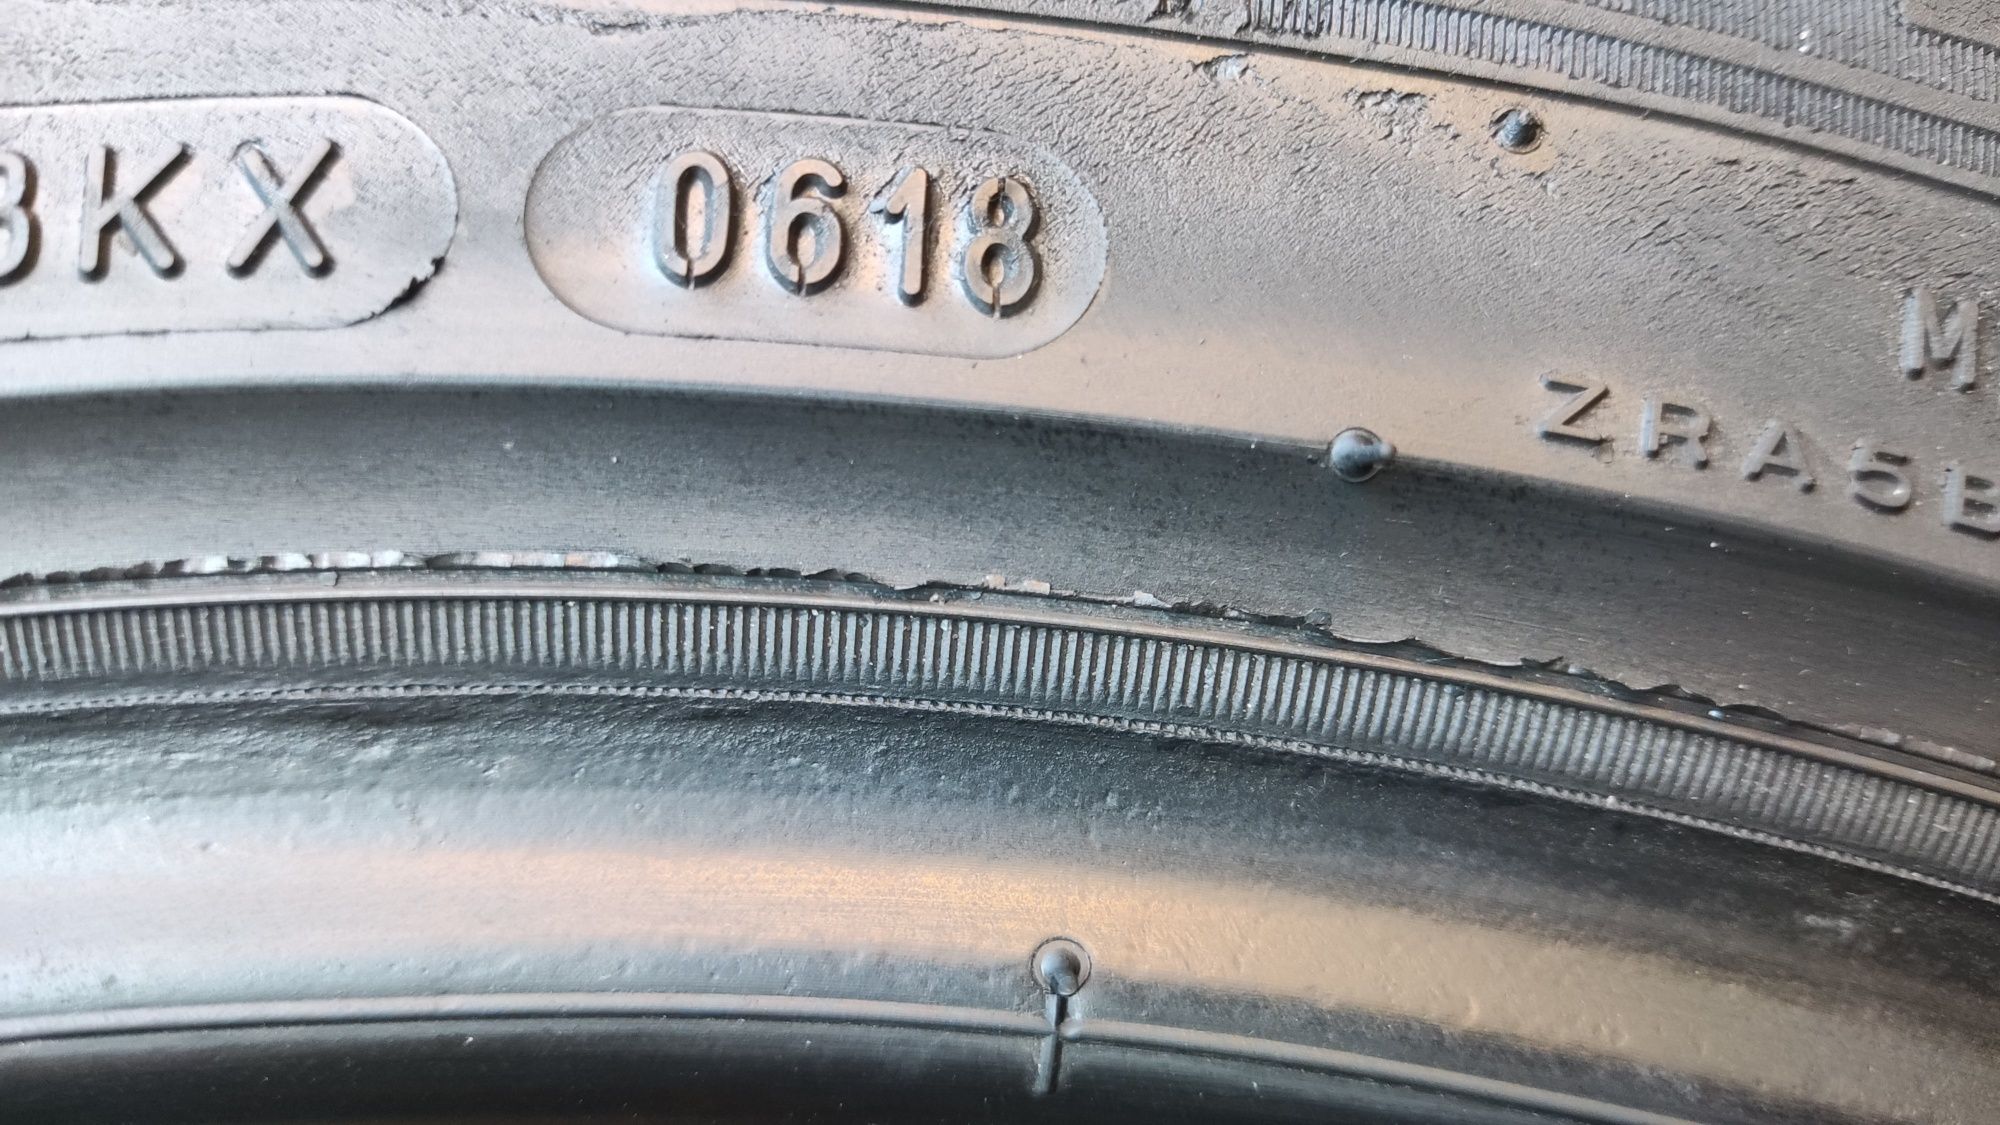 2бр летни гуми 205/55/16 Michelin Primacy 4
dot0618
6mm грайфер
Добро